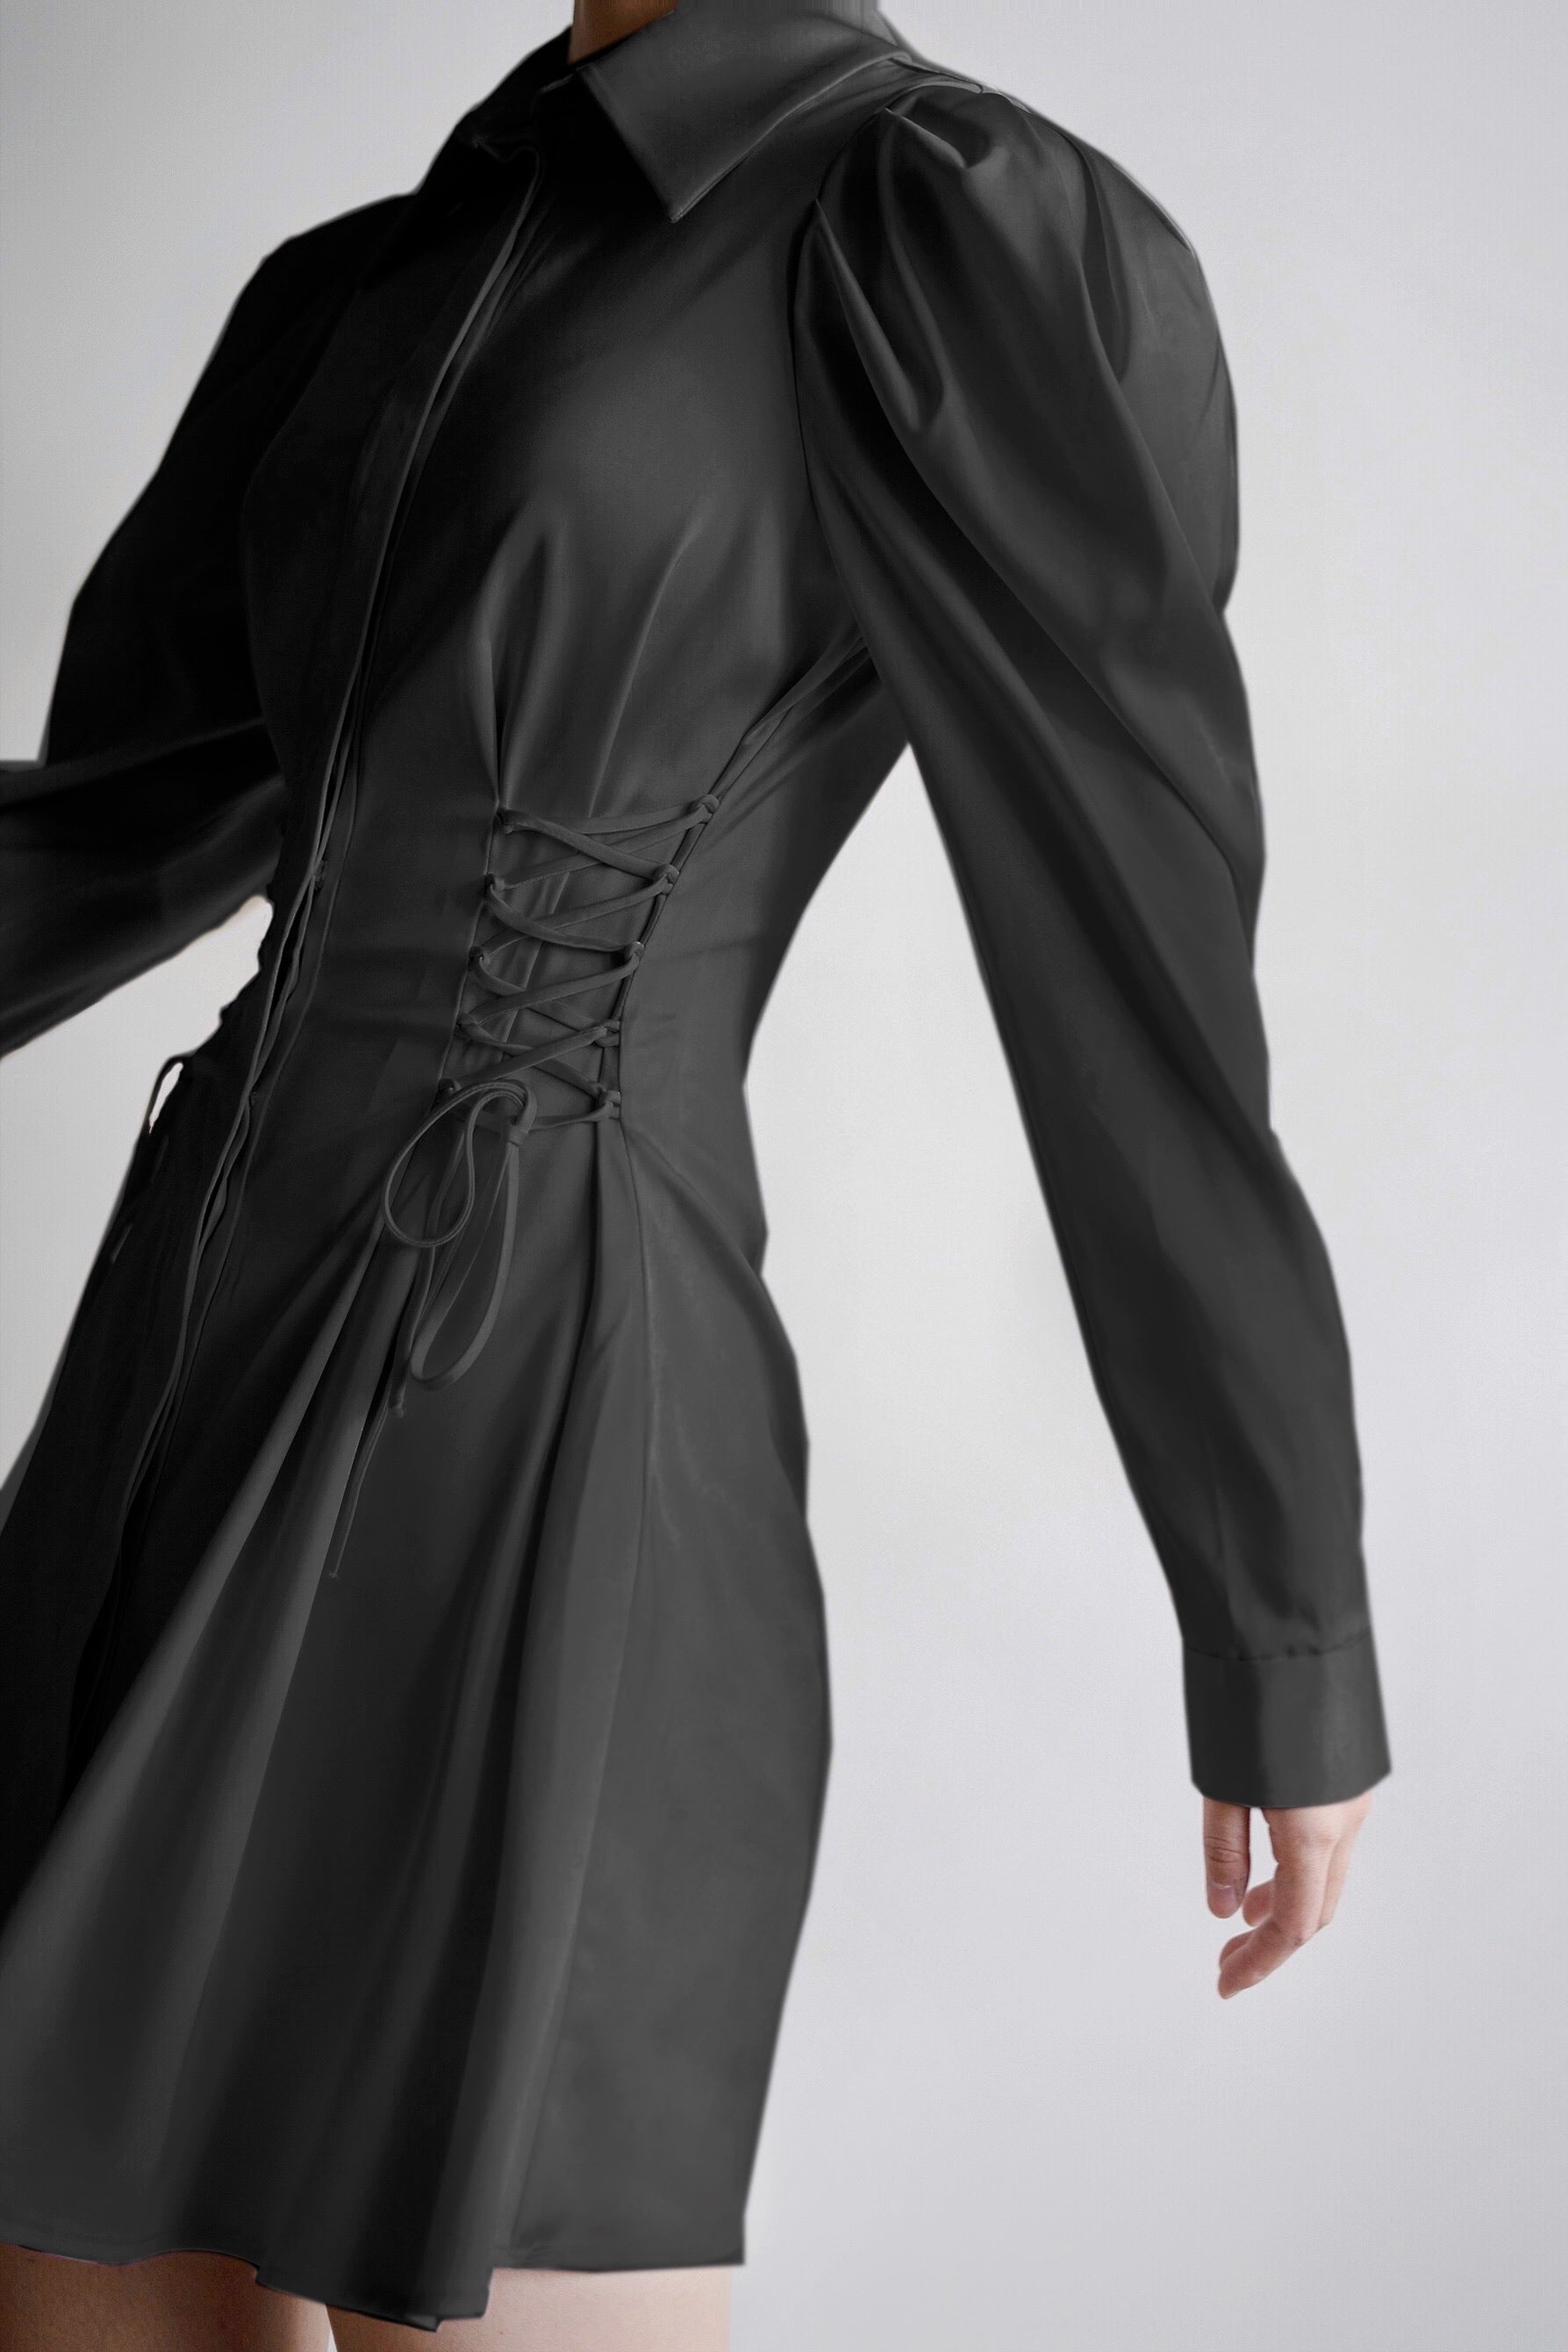 Fantasy Lace Up Satin Dress - Black